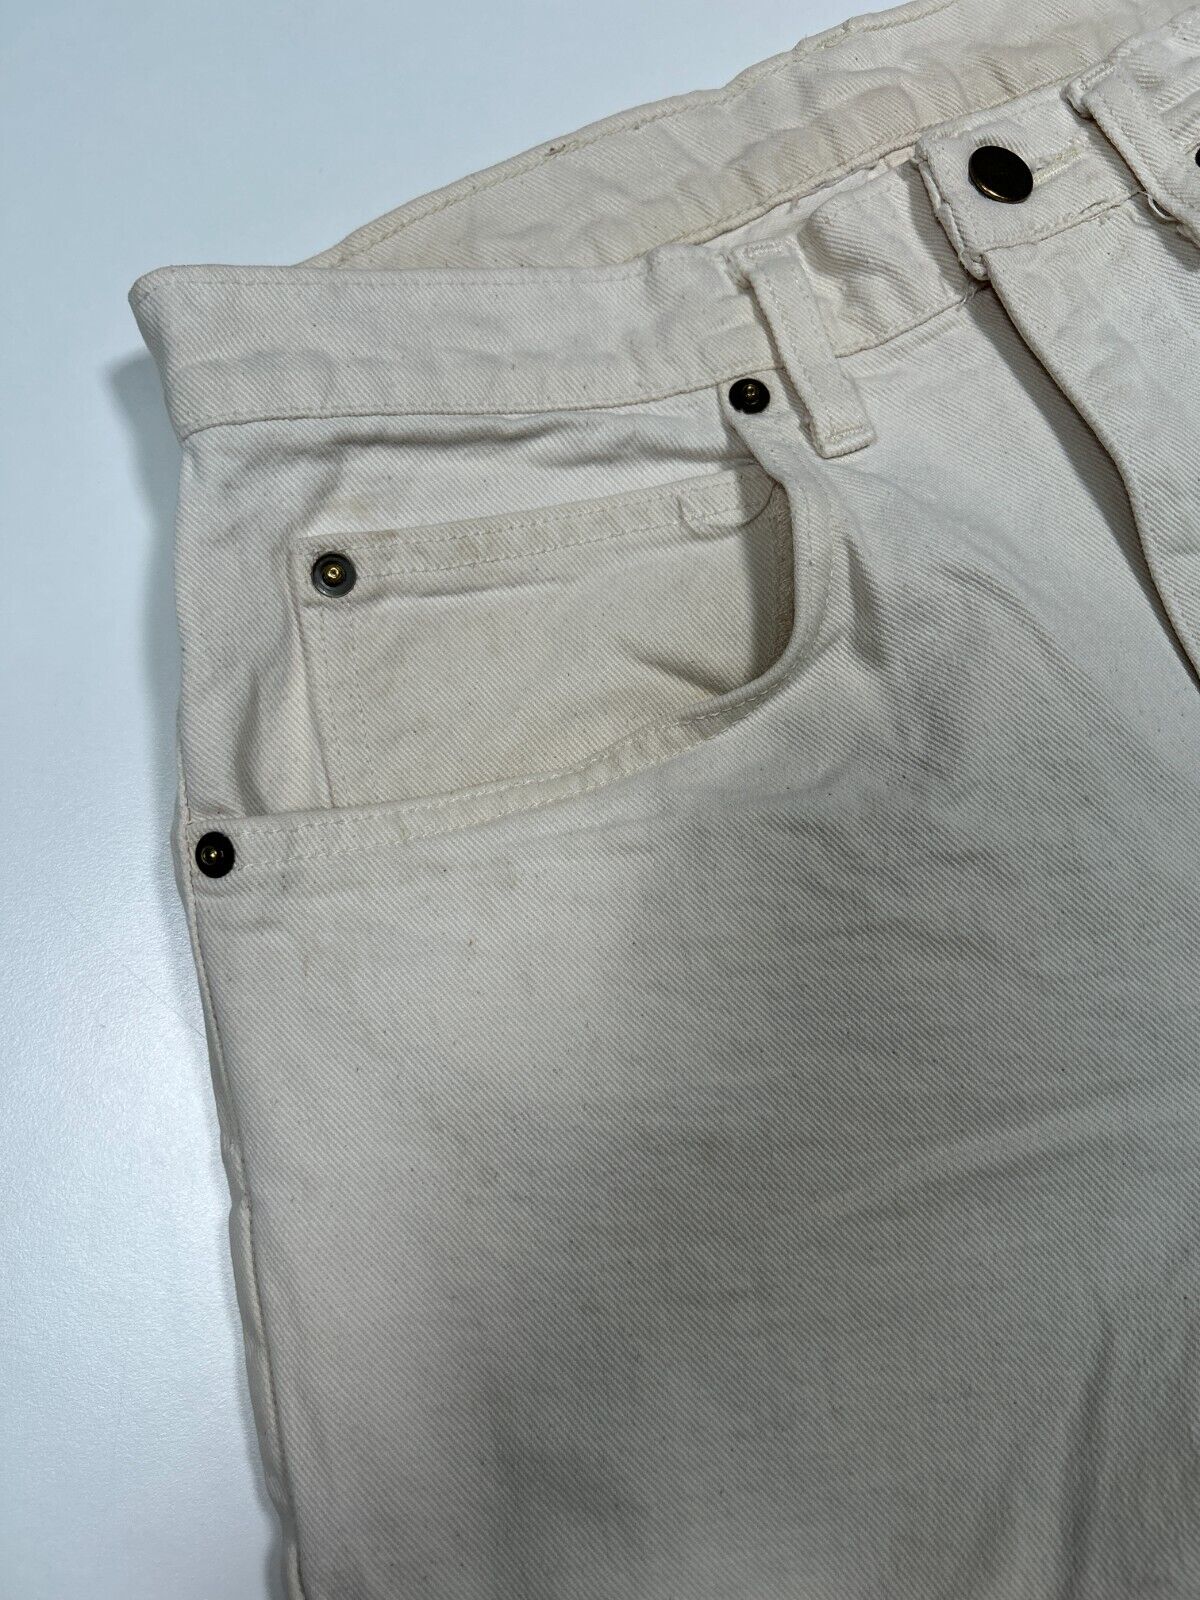 Vintage Bullseye Classic Jeans Wear Off White Cream Denim Shorts Size 31W